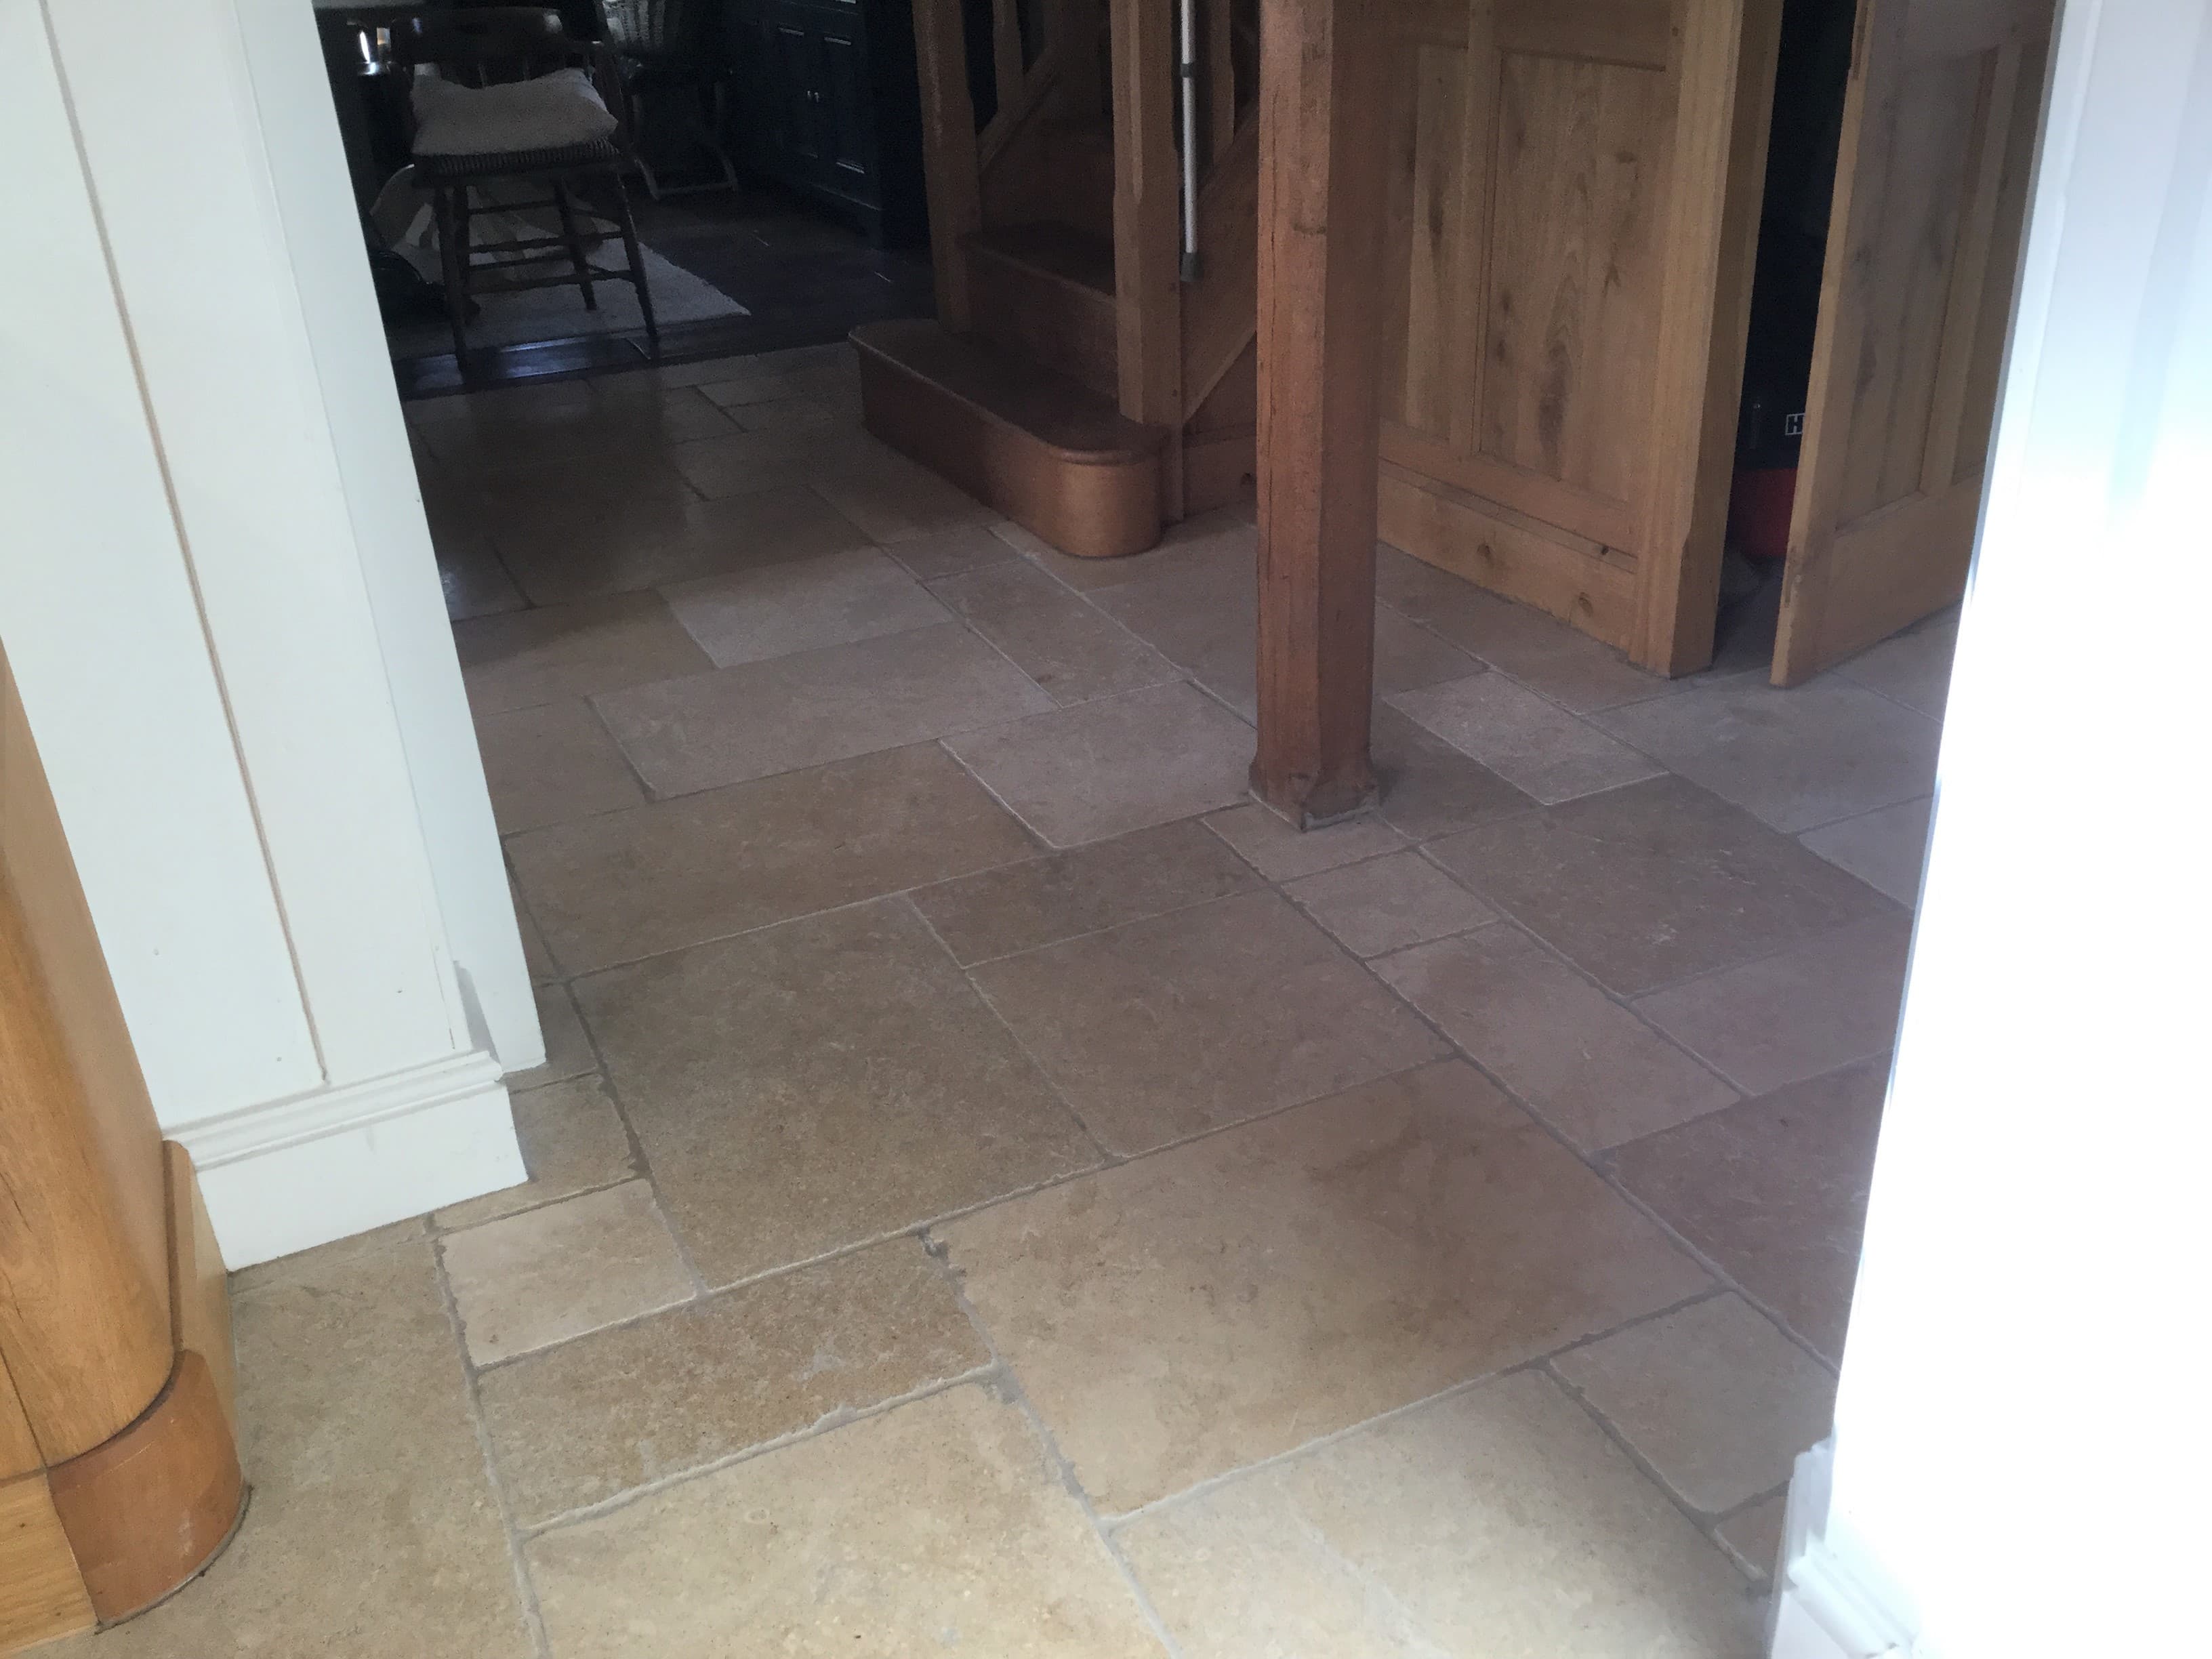 Limestone Kitchen Floor After Renovation Yelvertoft